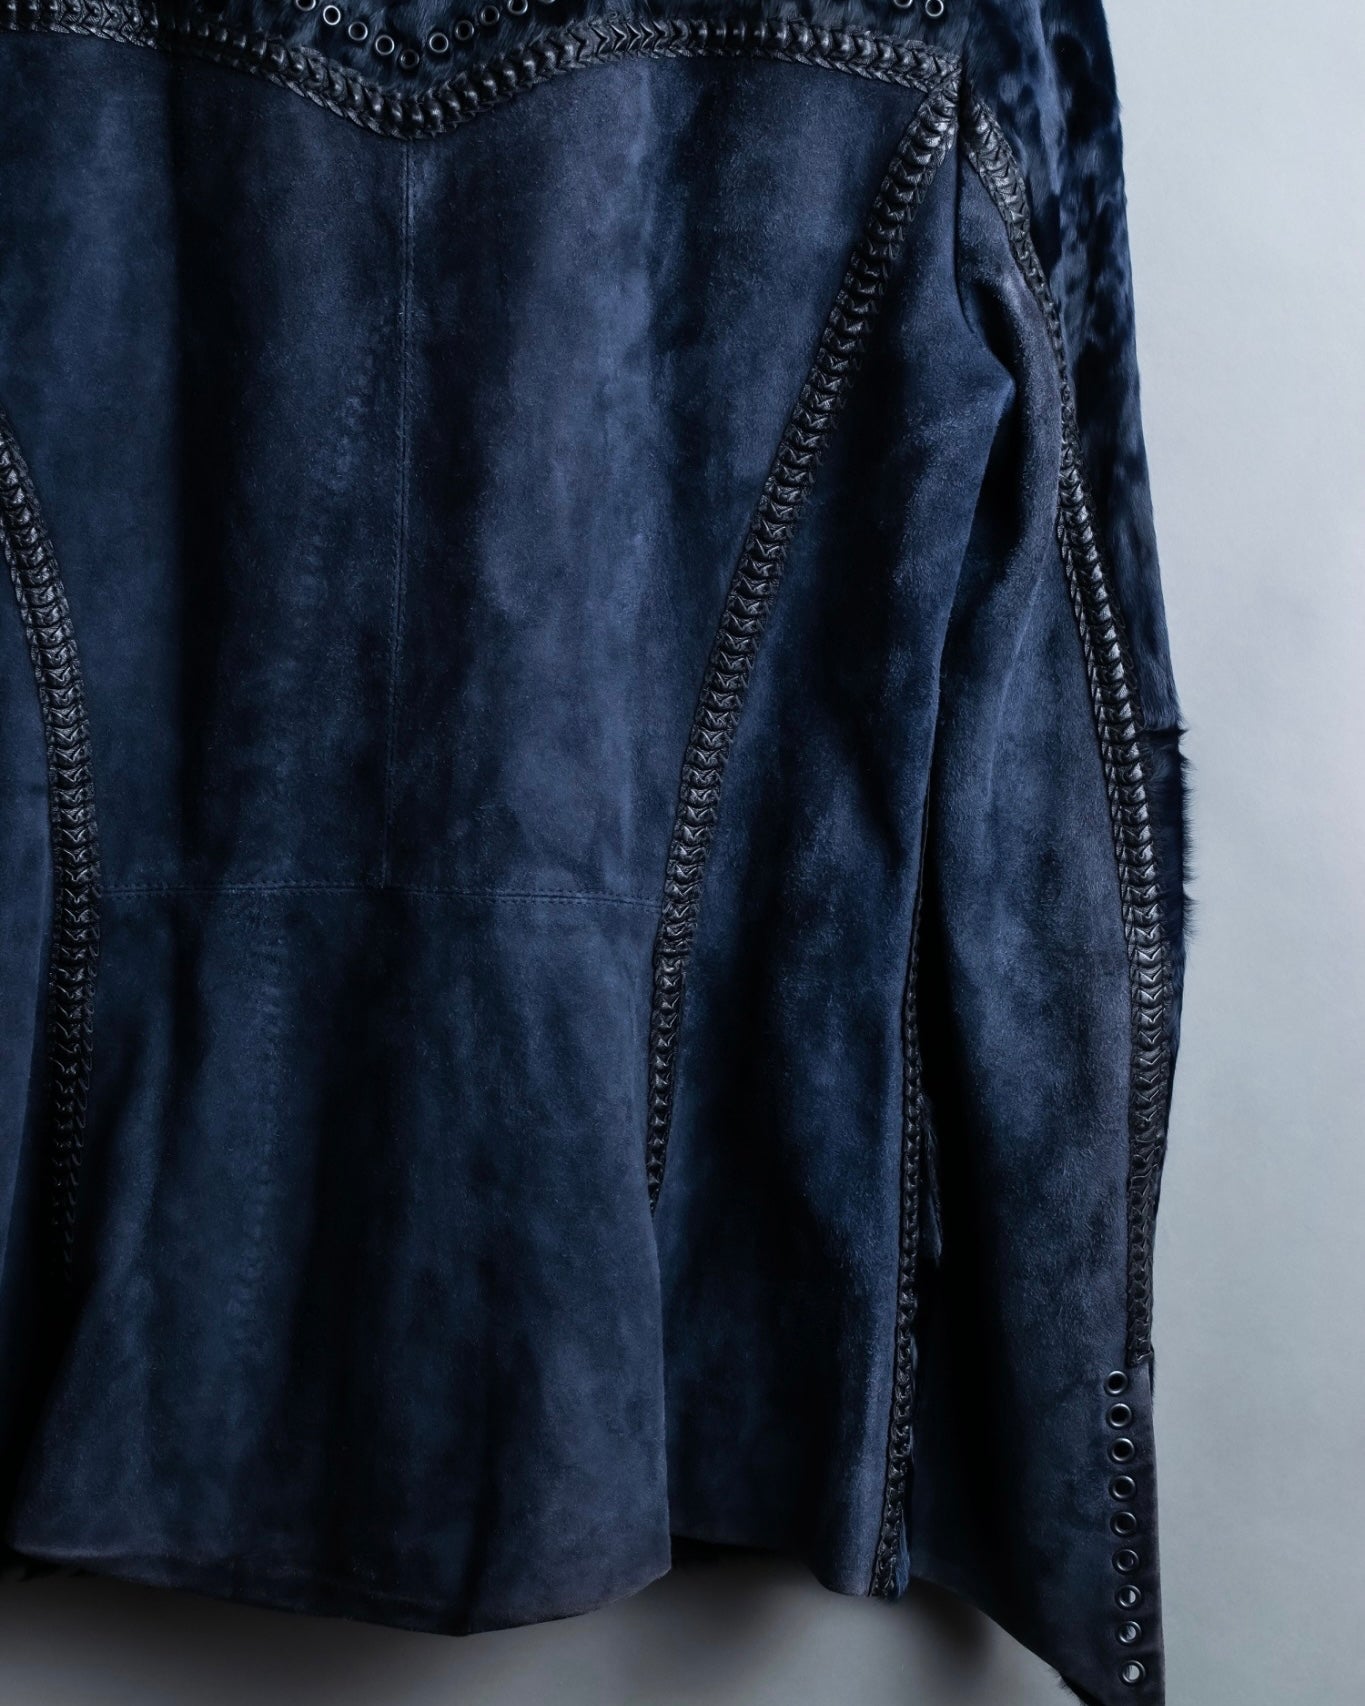 "GIANFRANCO FERRE" Swakara leather tailored jacket